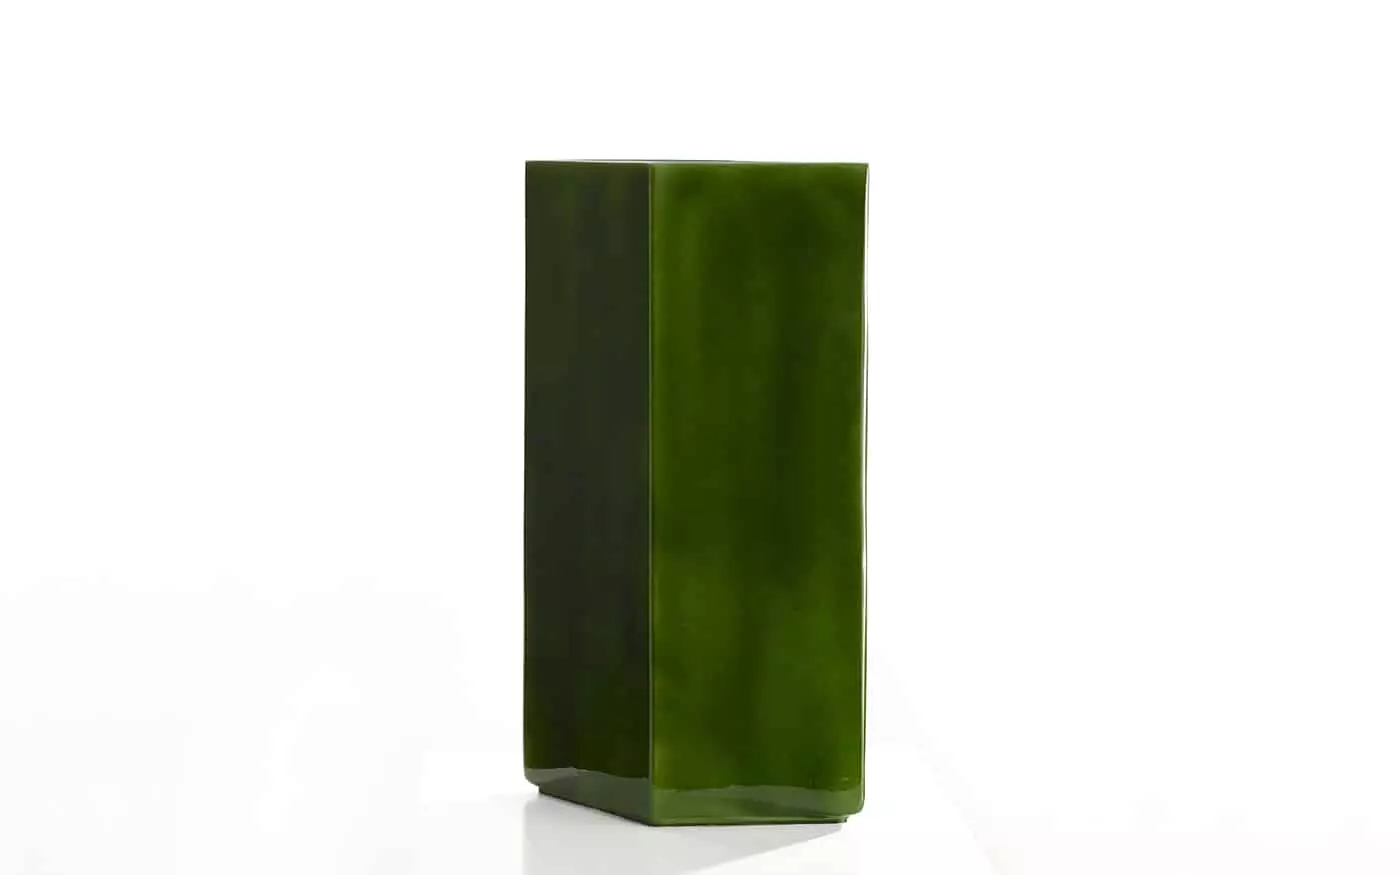 Vase Losange 84 green - Ronan and Erwan Bouroullec - Lucas Ratton x kamel mennour x Galerie kreo x Jacques Lacoste @Saint-Tropez.